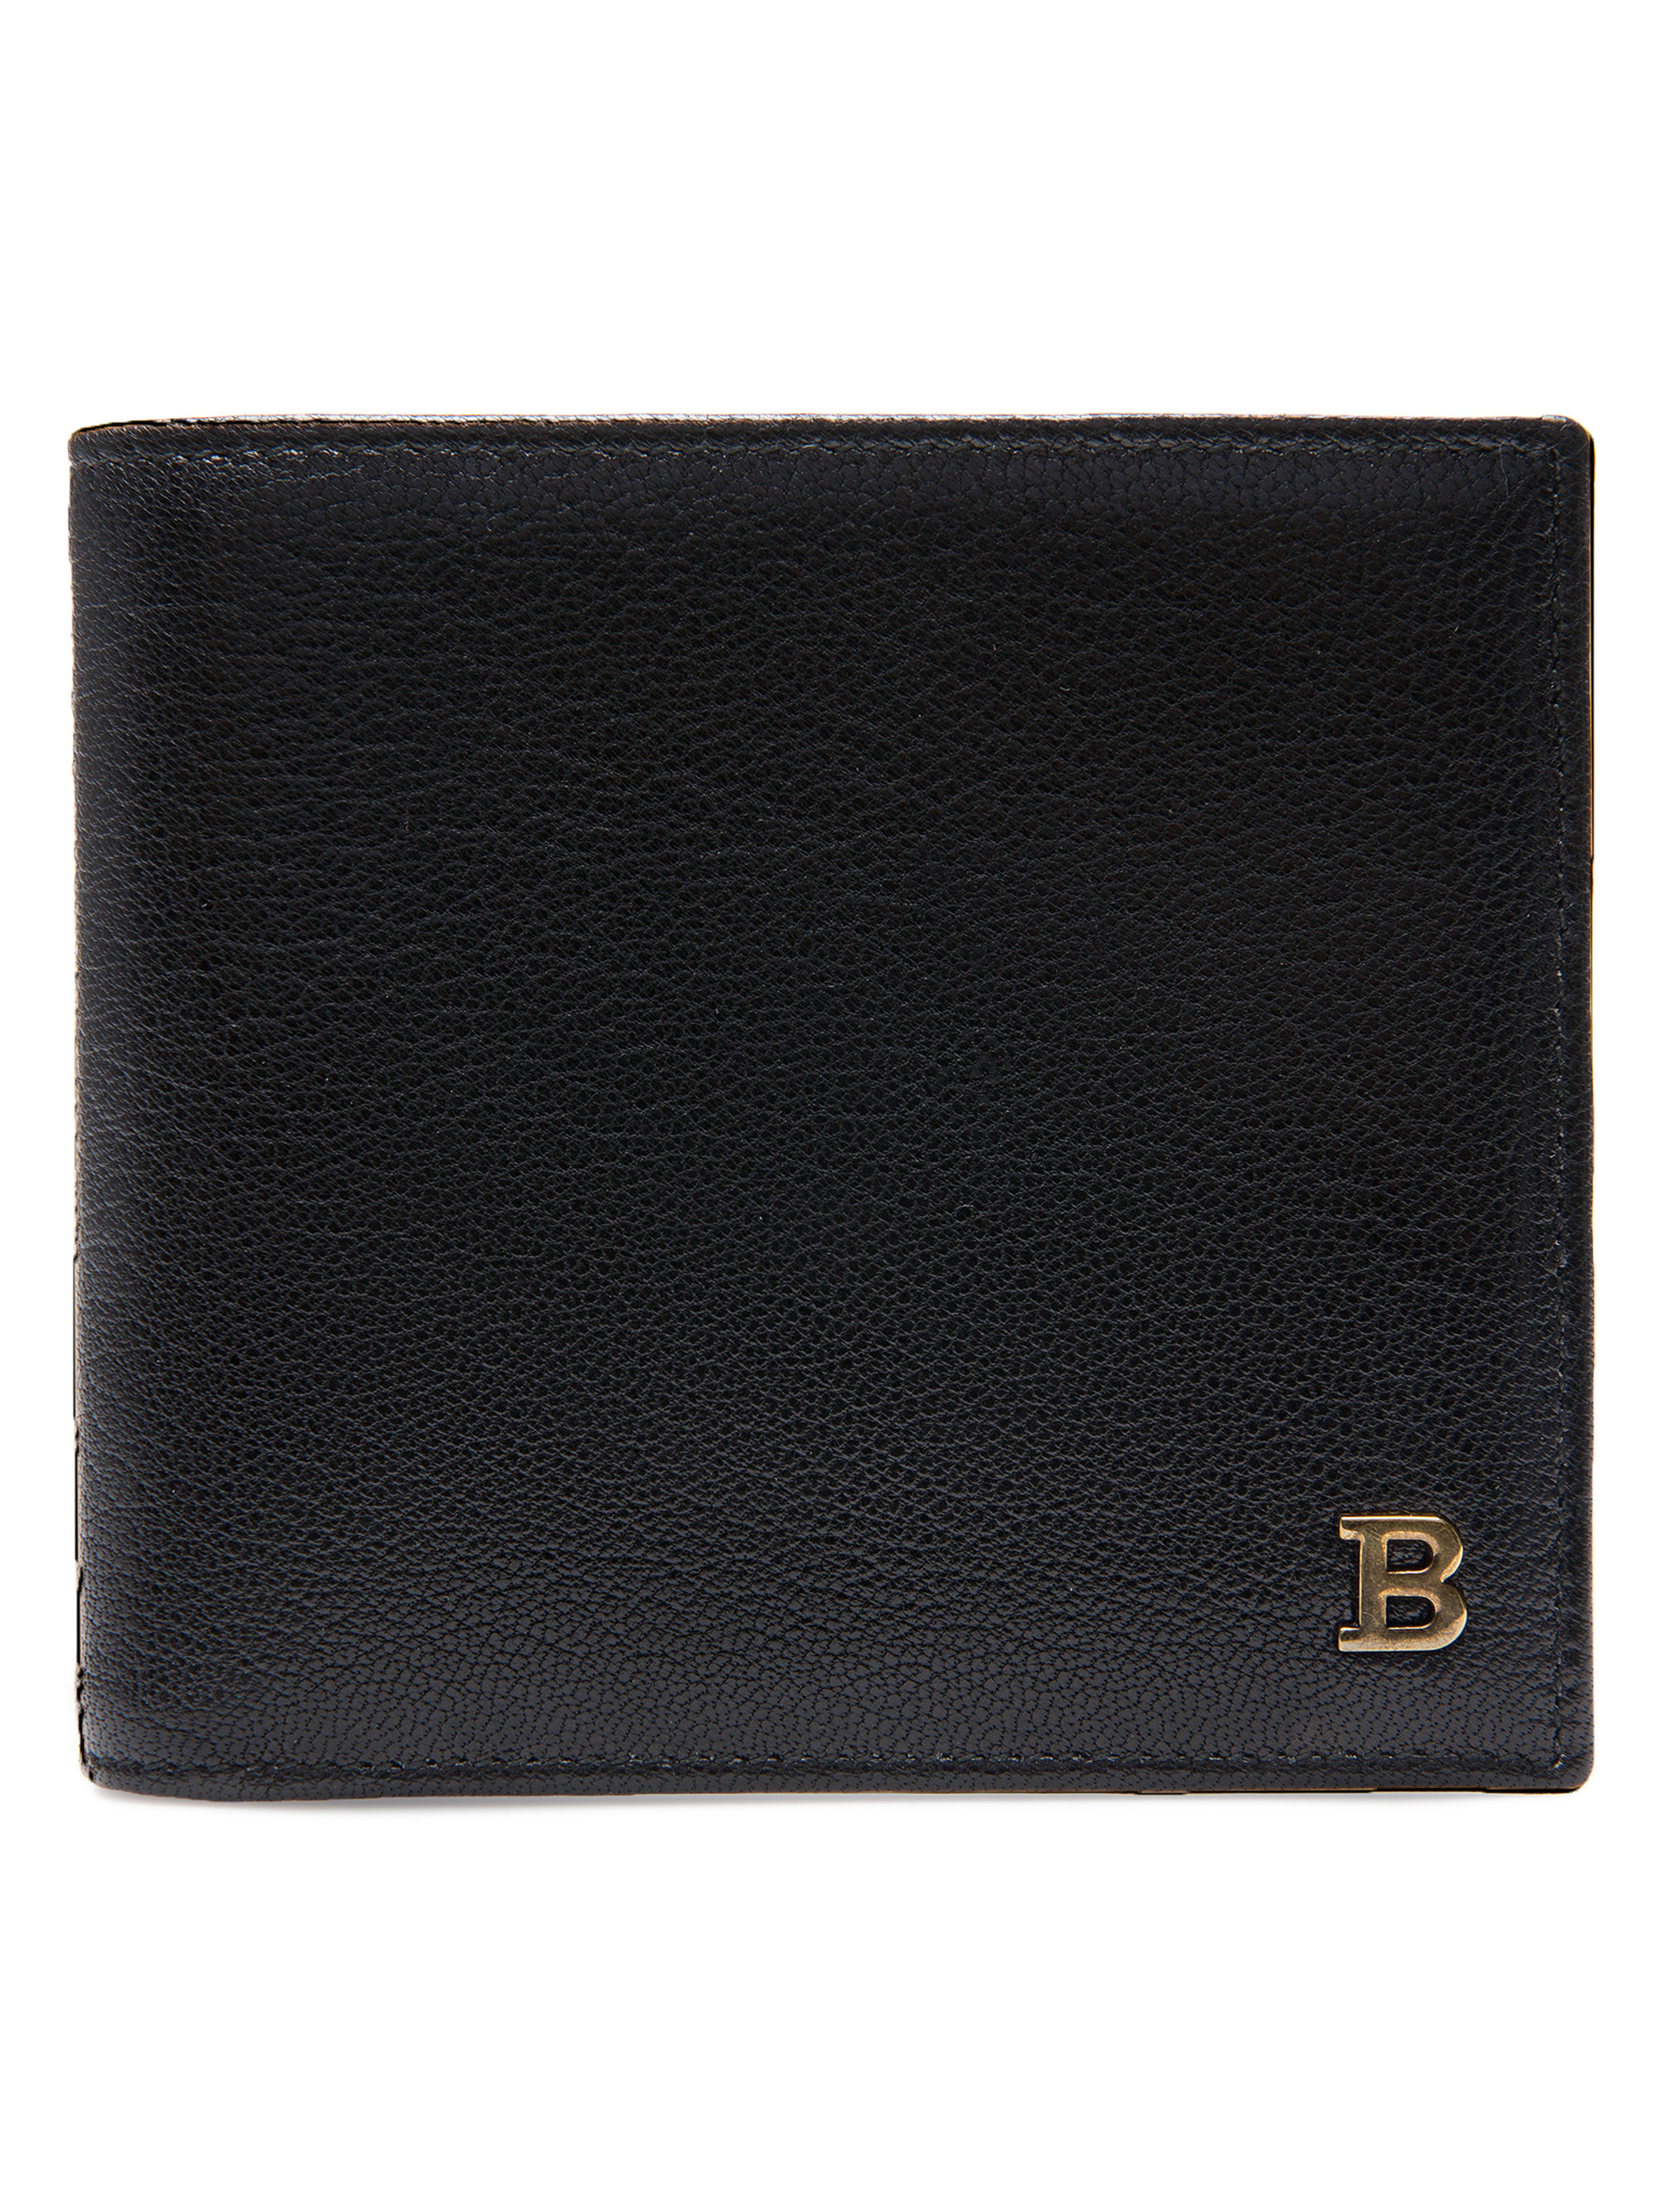 Bally Metal B Leather Bifold Wallet in Black for Men | Lyst